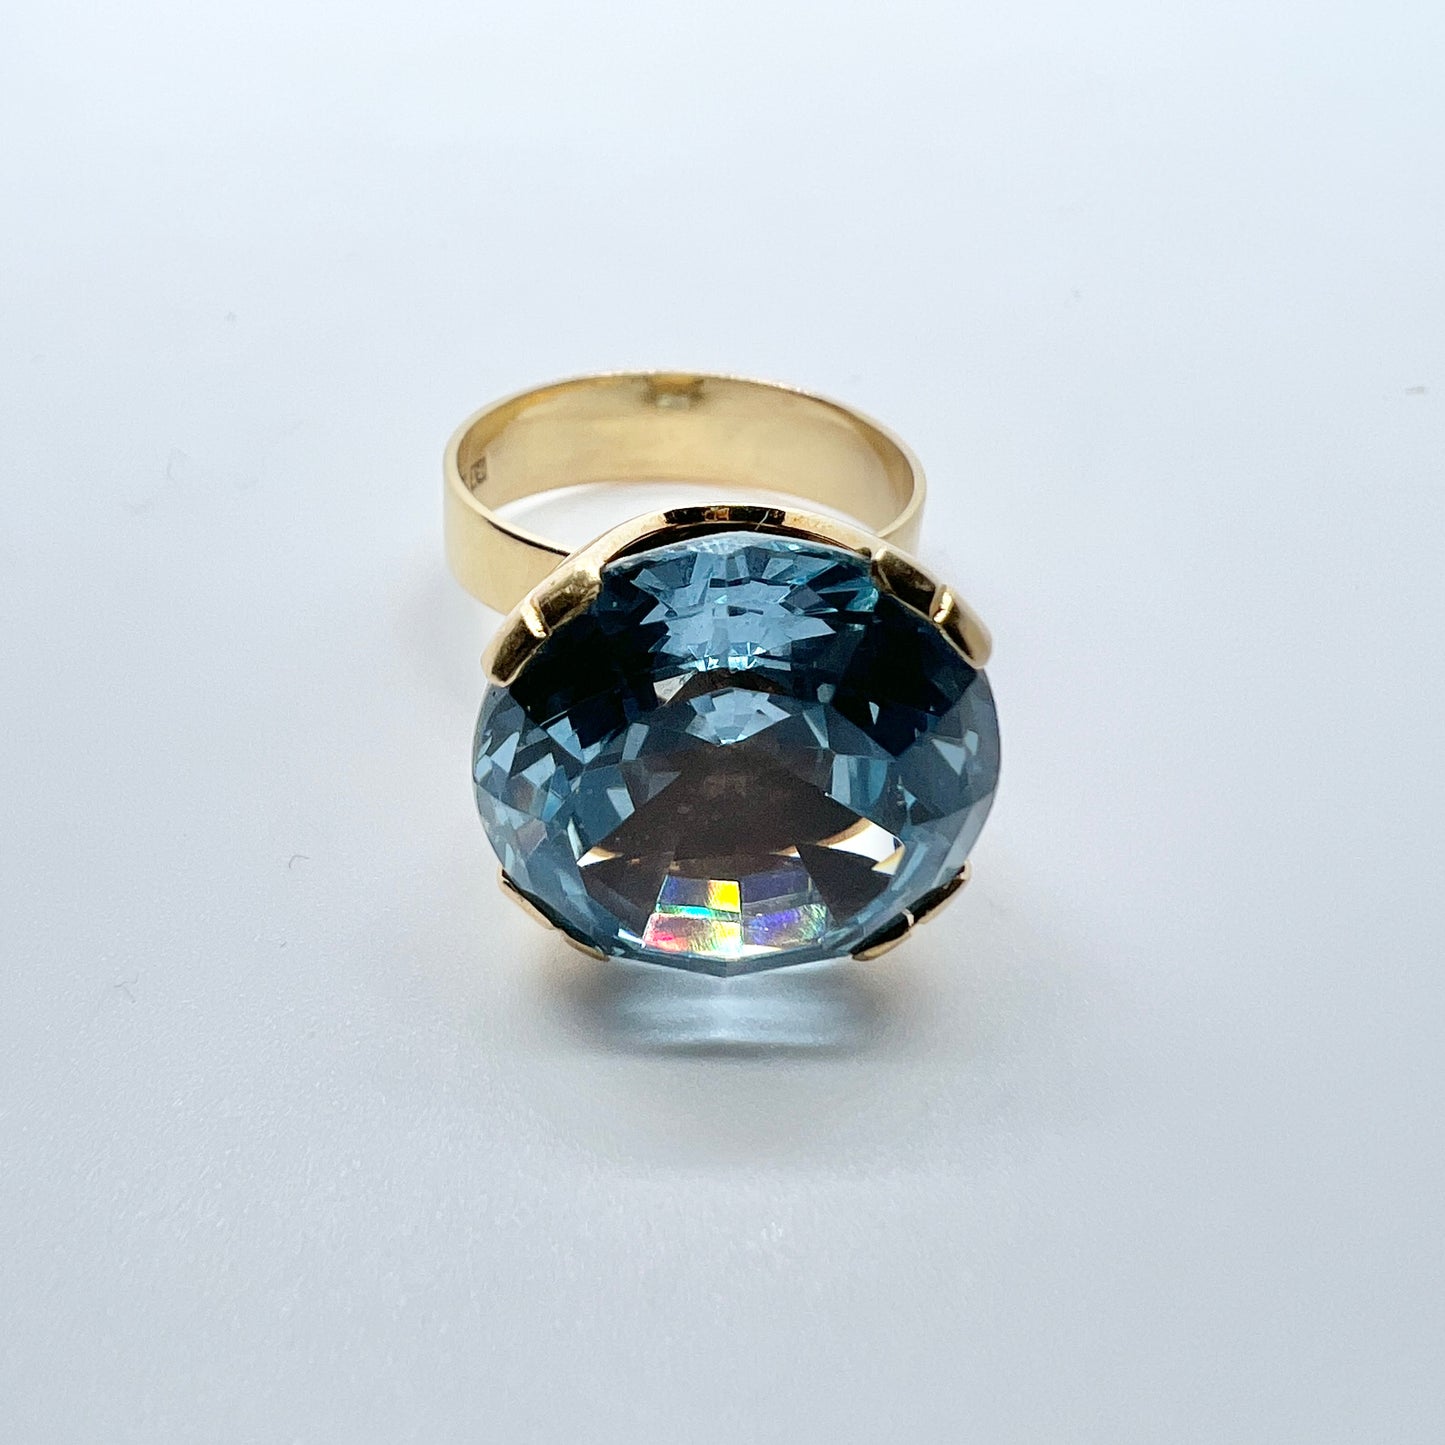 Hedbergs, Sweden 1965. Vintage 18k Gold Blue Synthetic Spinel Ring.